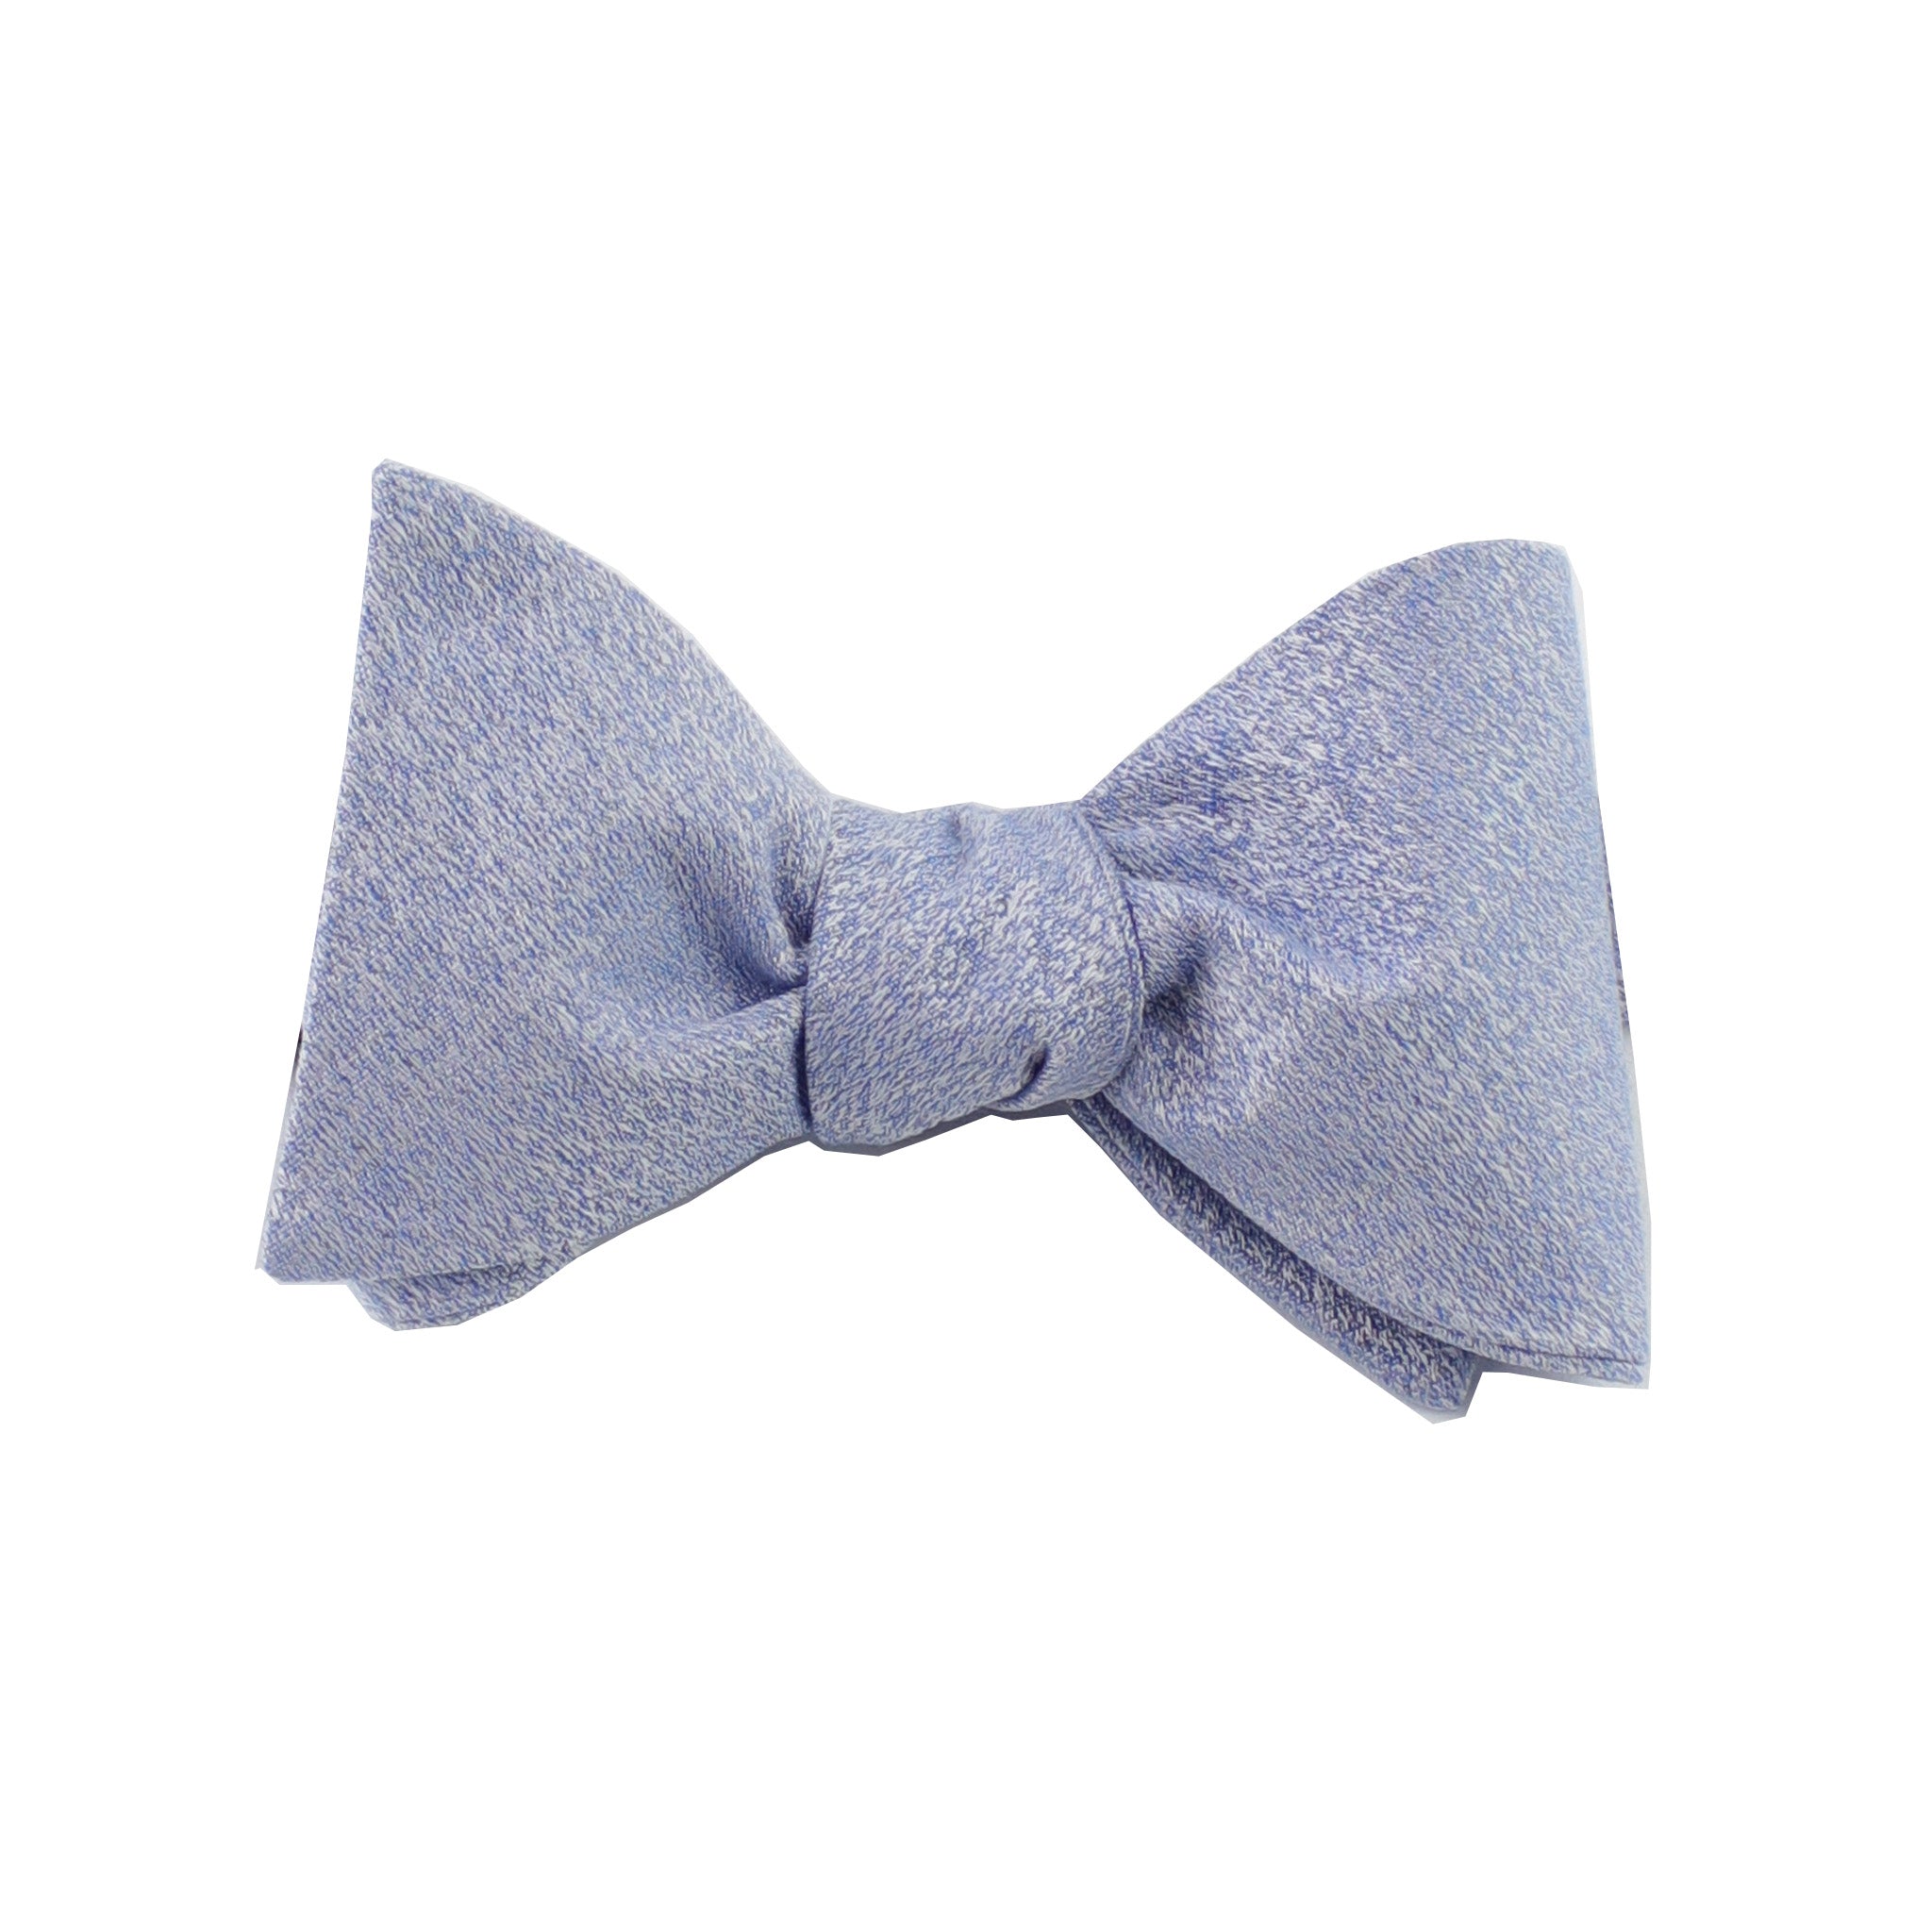 Light Blue Textured Self Tie Bow Tie from DIBI